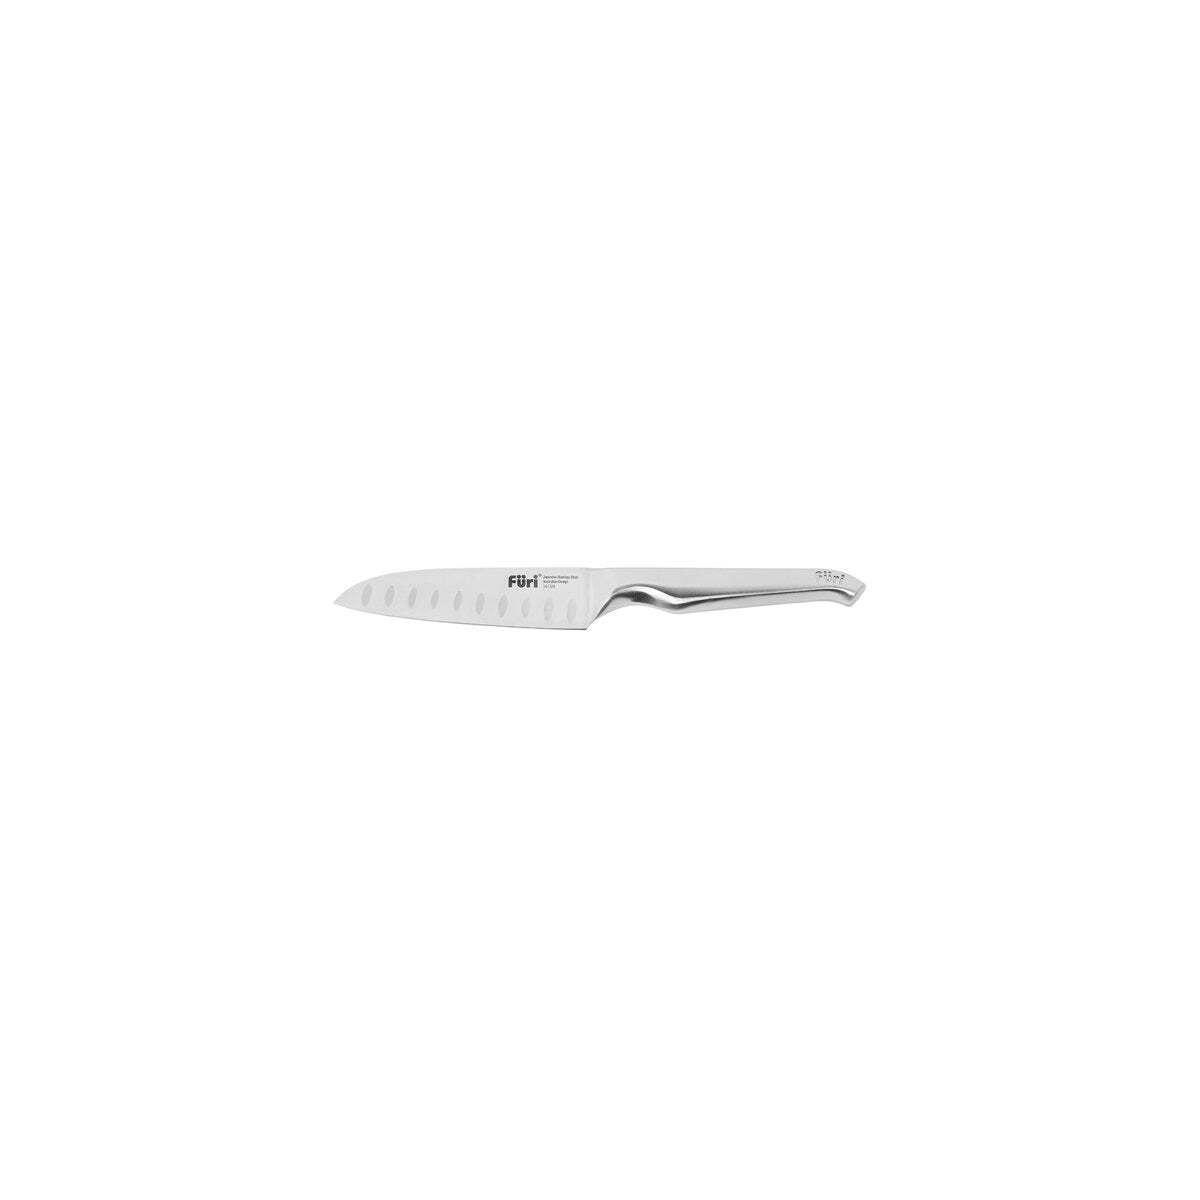 Furi-Pro Asian Utlity Knife 12cm 